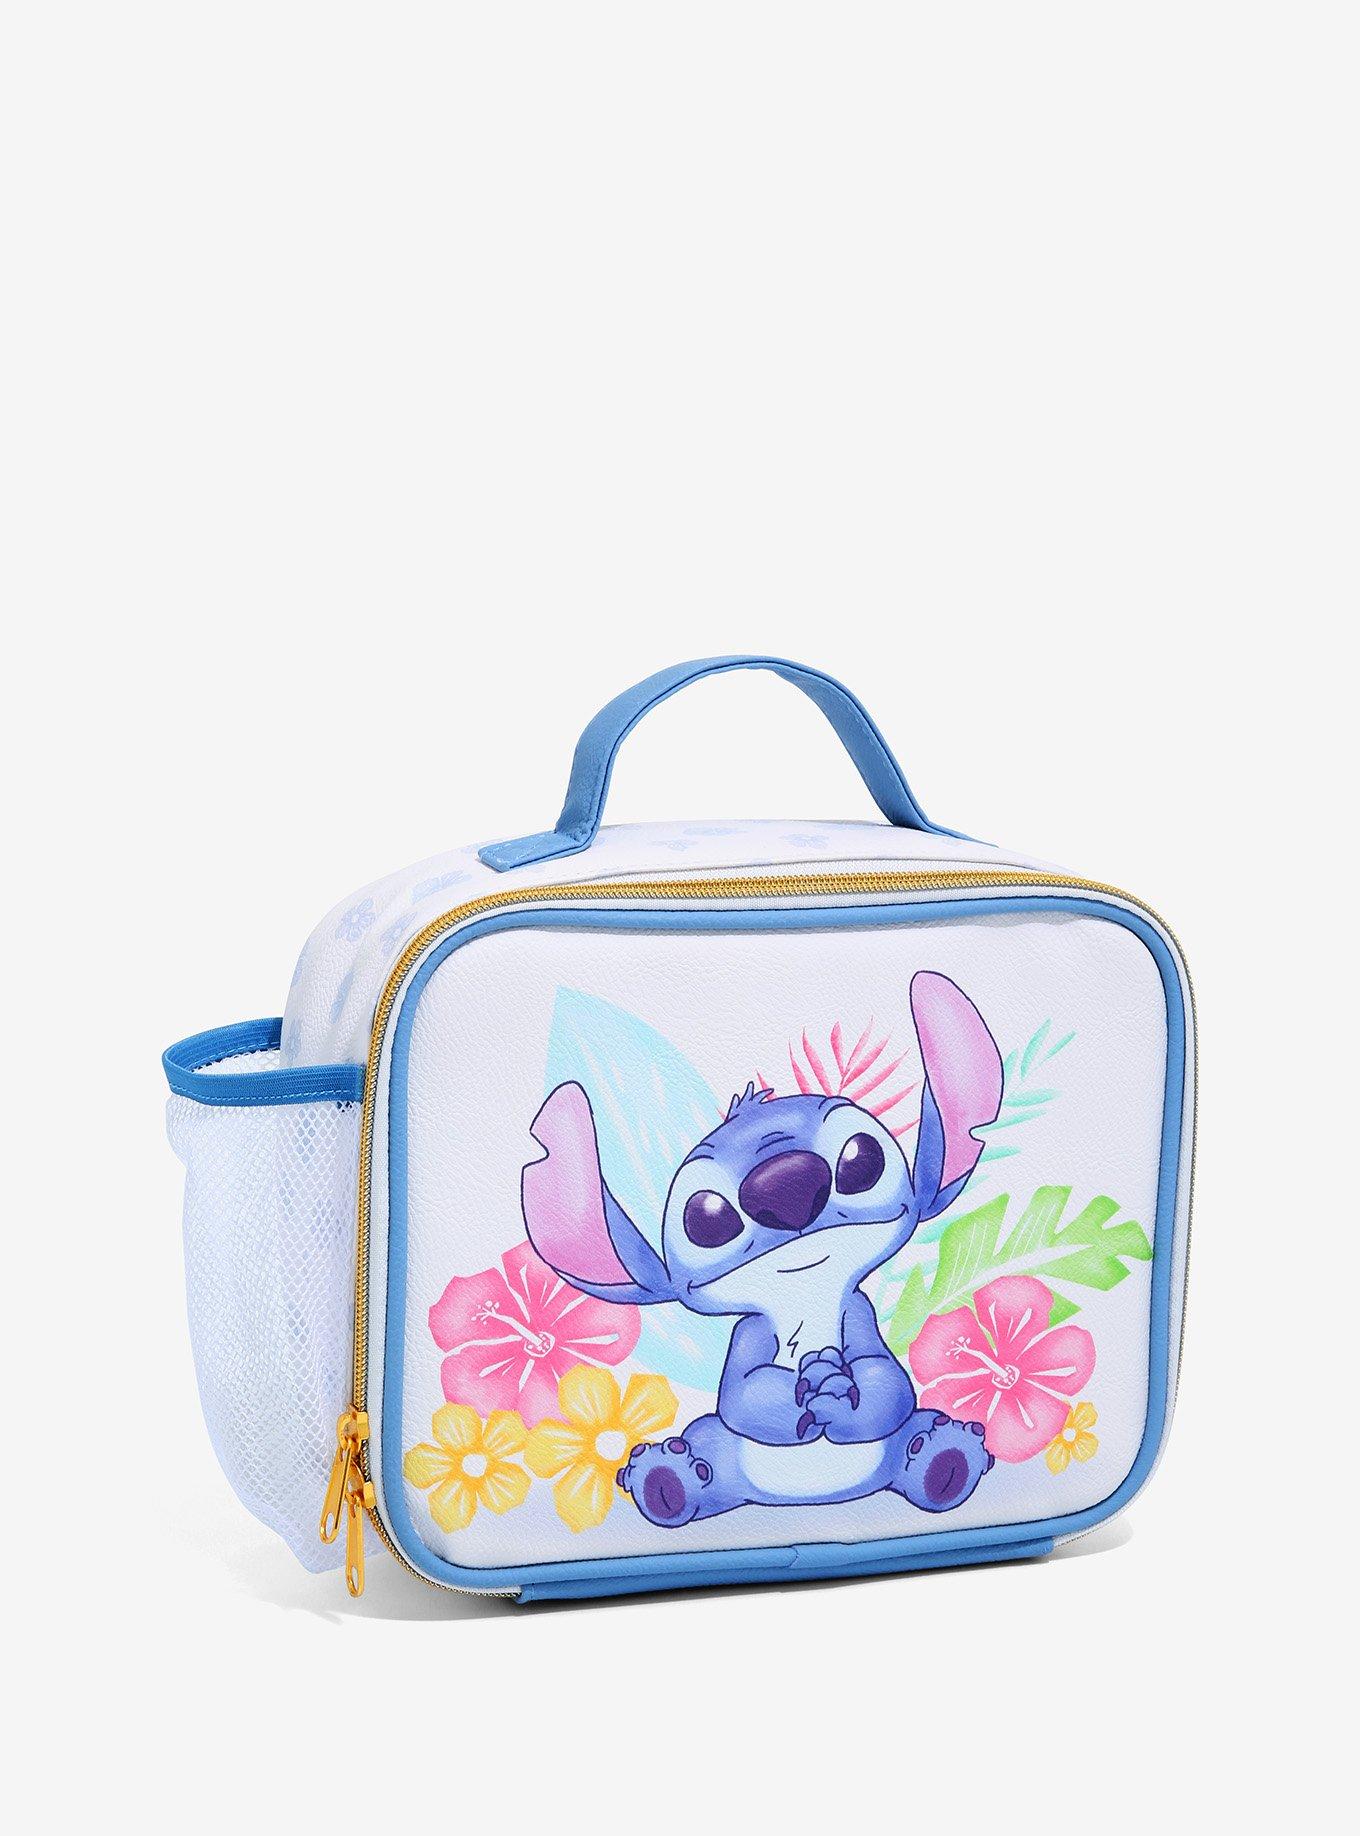 Disney Stitch Flower Friend Reusable Rectangular Polyester Lunch Bag 